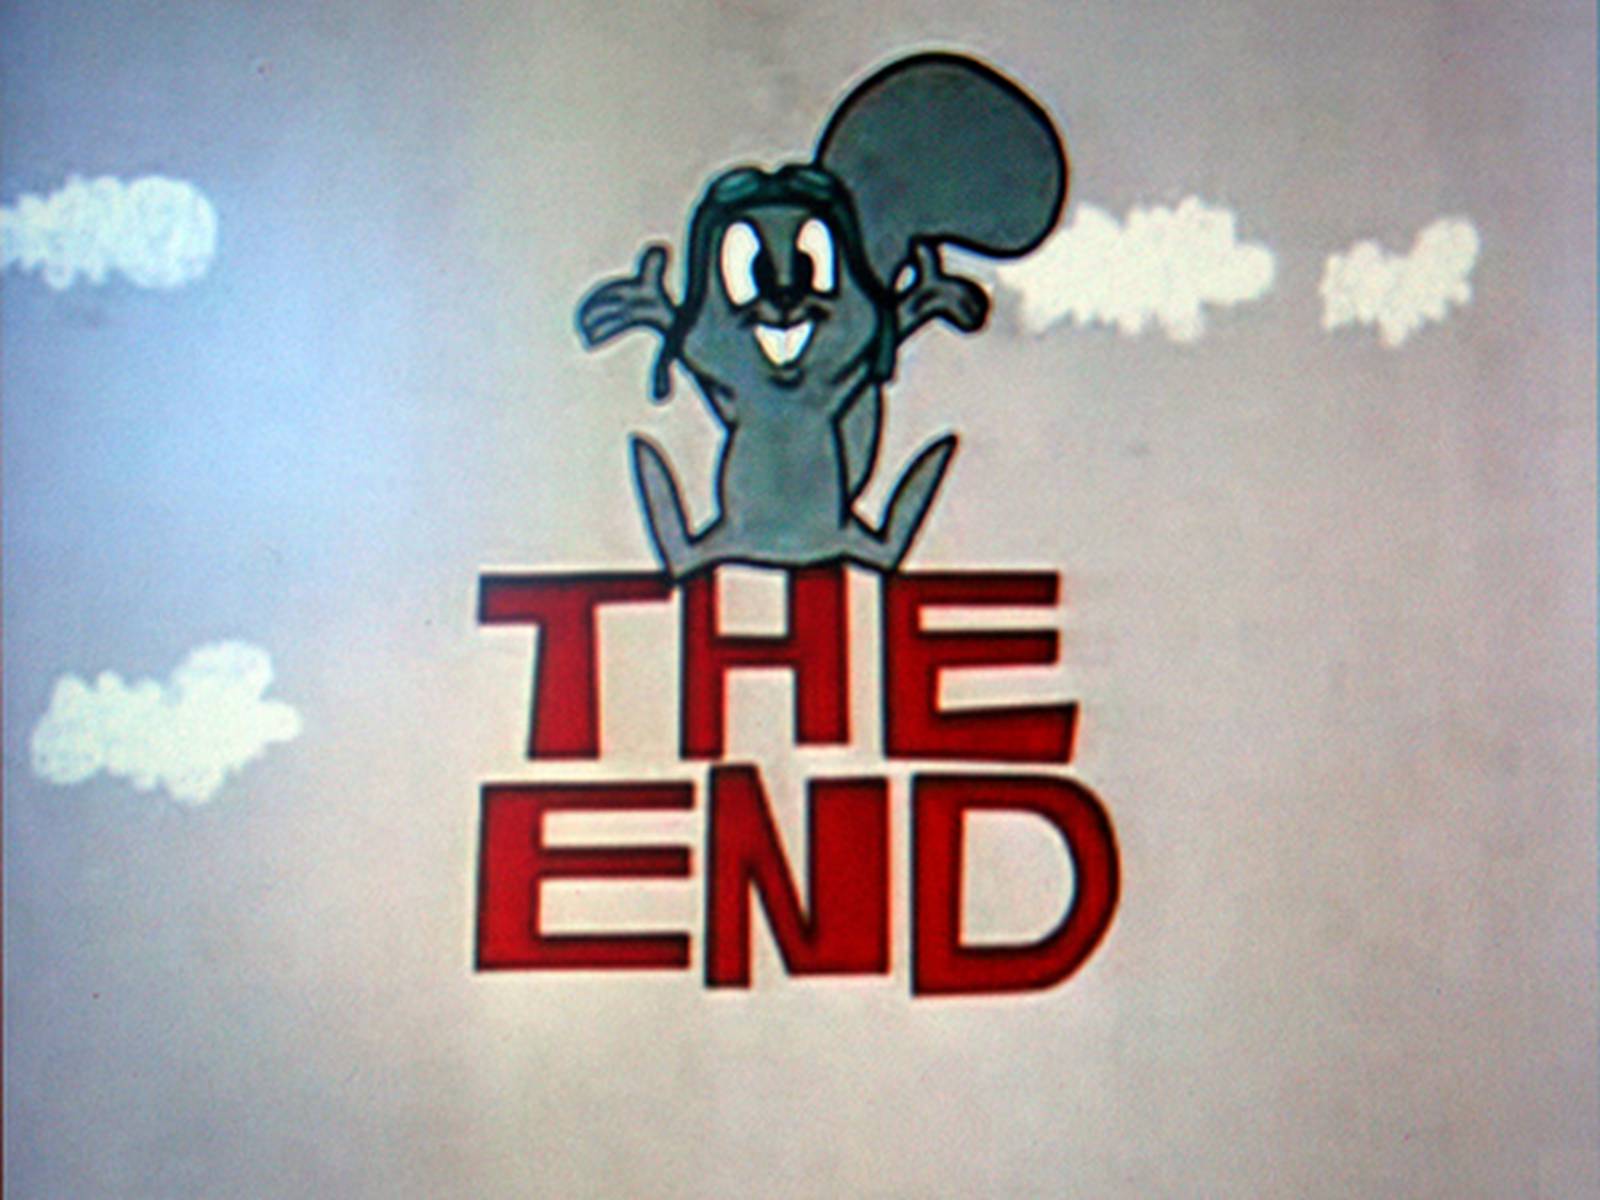 Votv the end. The end. Конец the end. The end рисунок. The end надпись.